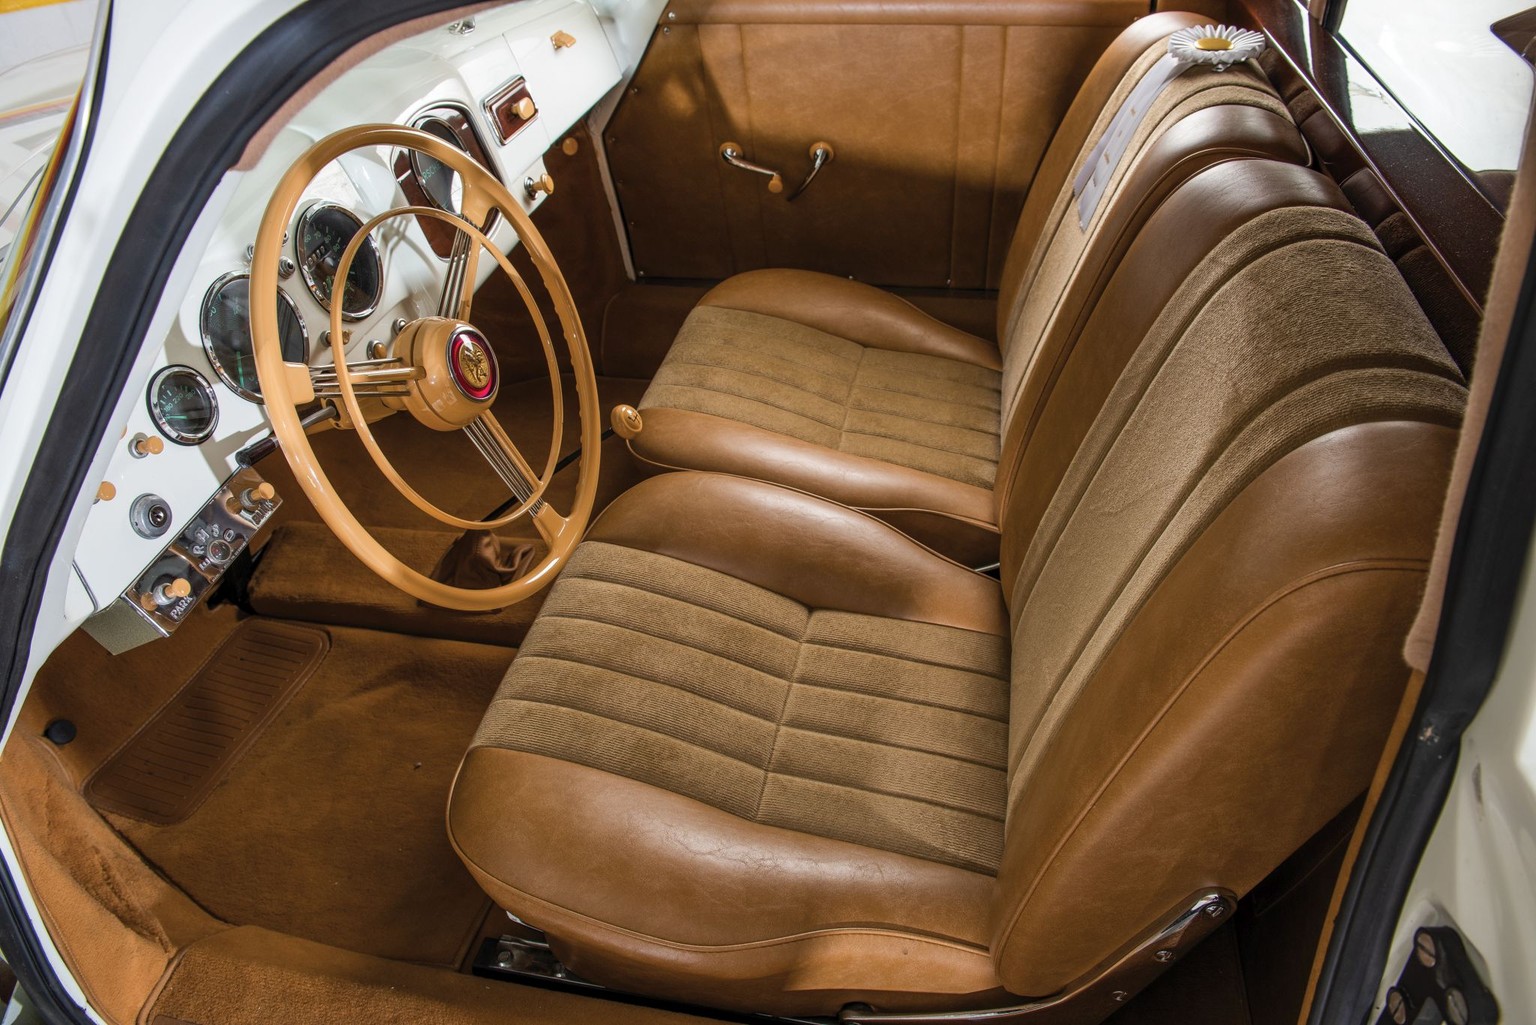 1953 Porsche 356 Limousine Custom
Offered without reserve
RM | Sotheby&#039;s - THE TAJ MA GARAJ COLLECTION 28 SEPTEMBER 2019 auktion 

https://rmsothebys.com/en/auctions/tg19/the-taj-ma-garaj-collect ...